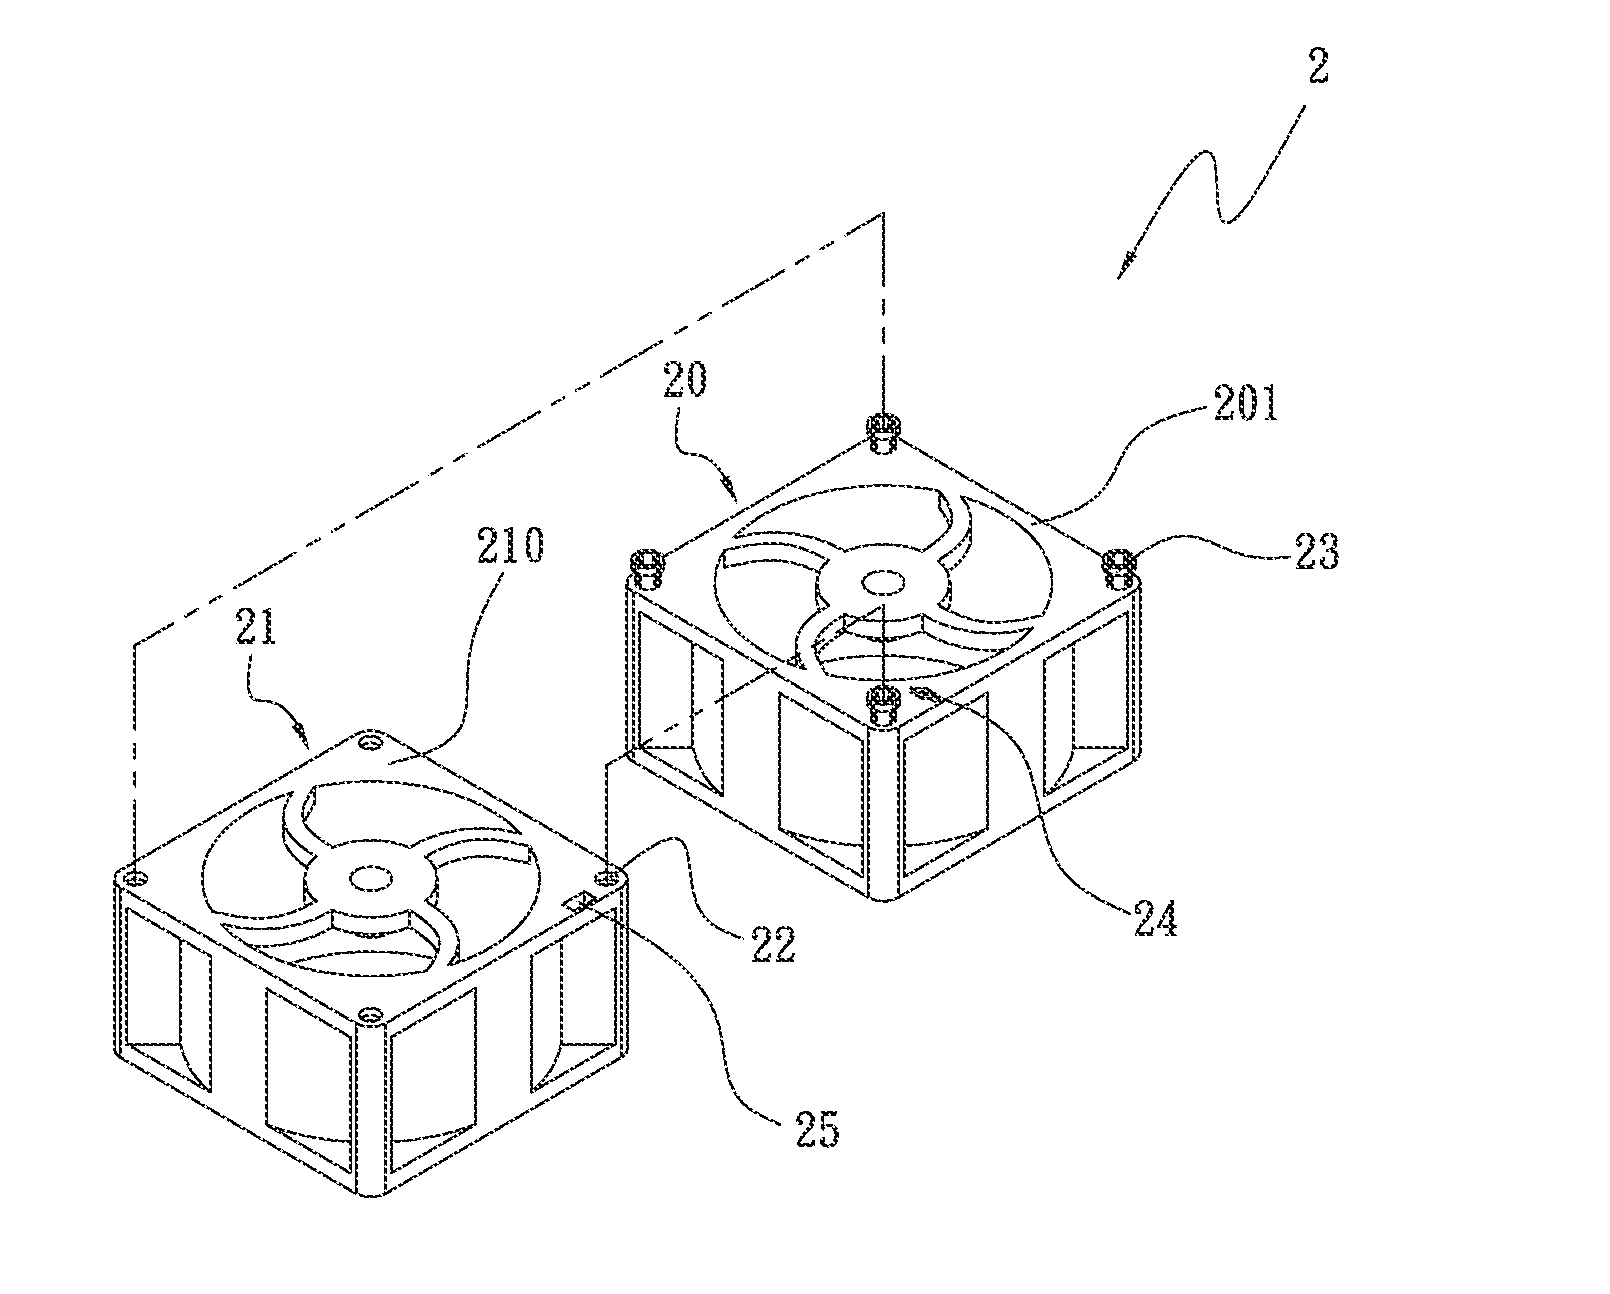 Anti-vibration serial fan structure